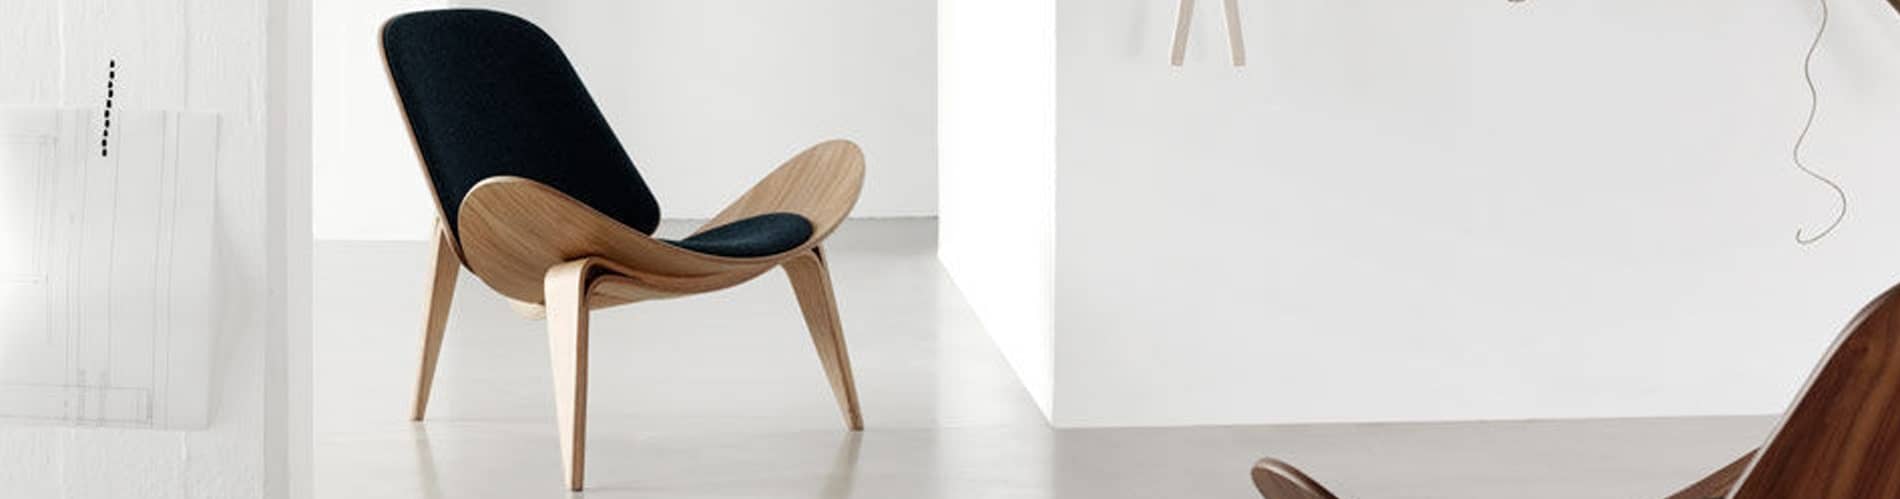 Hans Wegner shell chair (CH07) inside a room | byBespoek